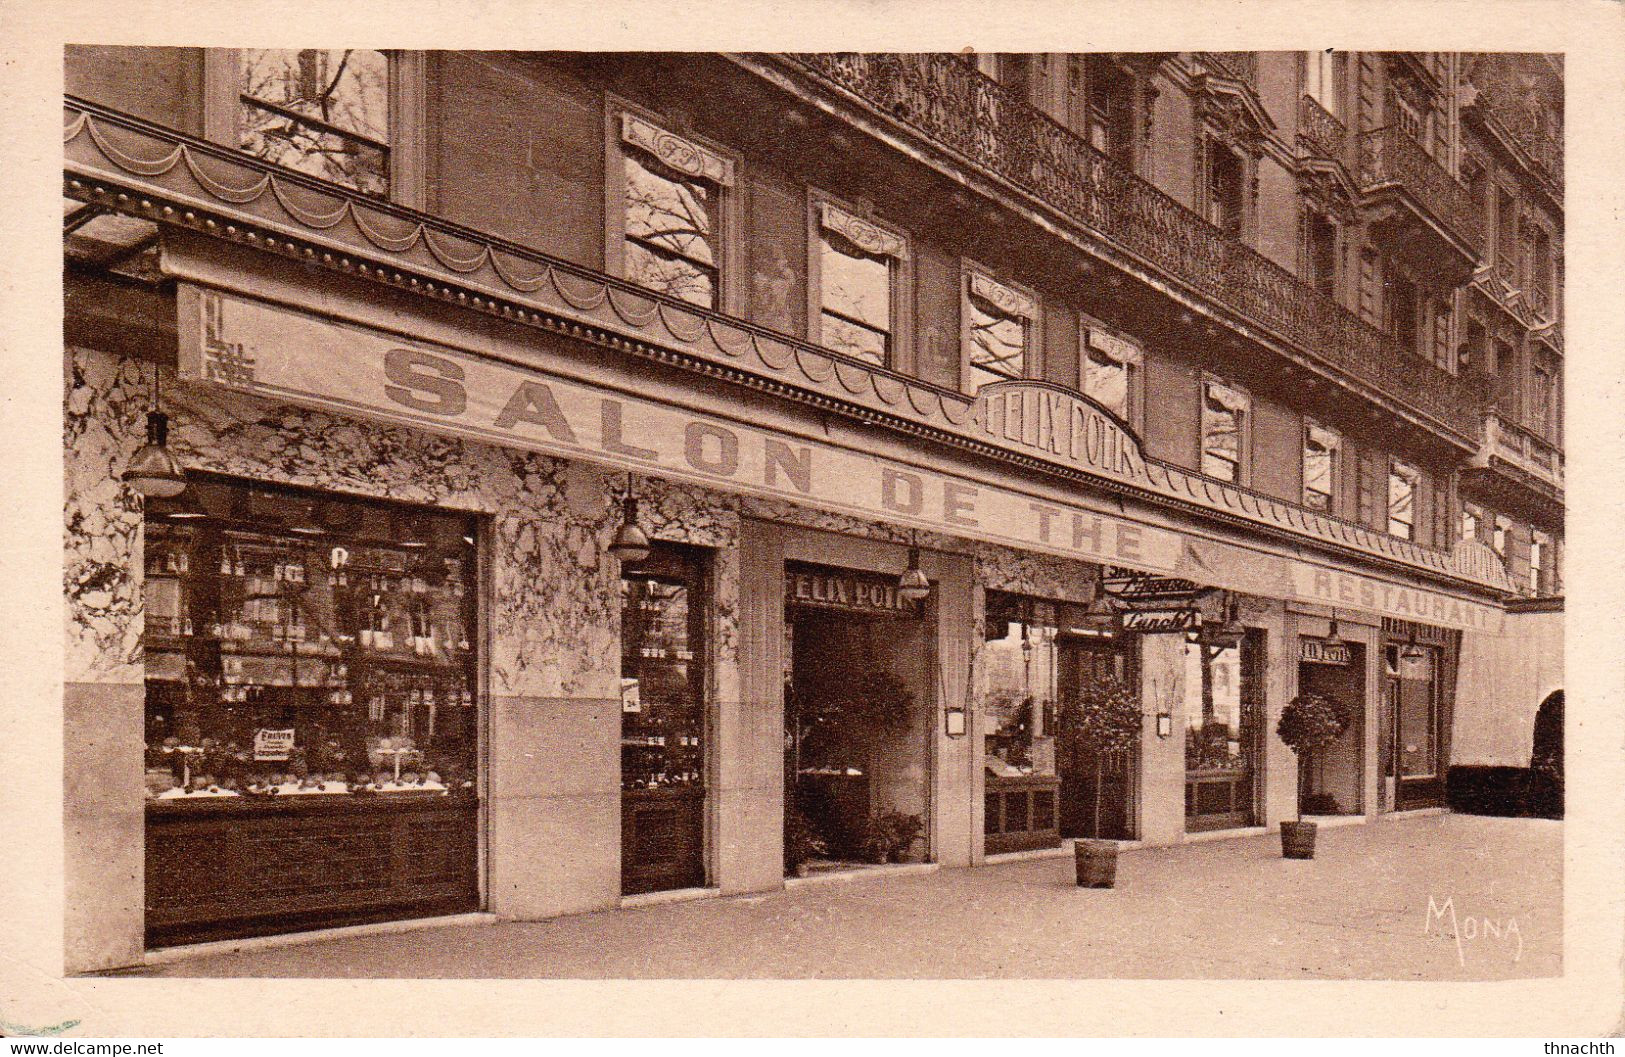 PARIS (Seine) - Restaurant, Salon De Thé, Bar "Saint-Augustin" - 43 Boulevard Malesherbes - Cafés, Hotels, Restaurants